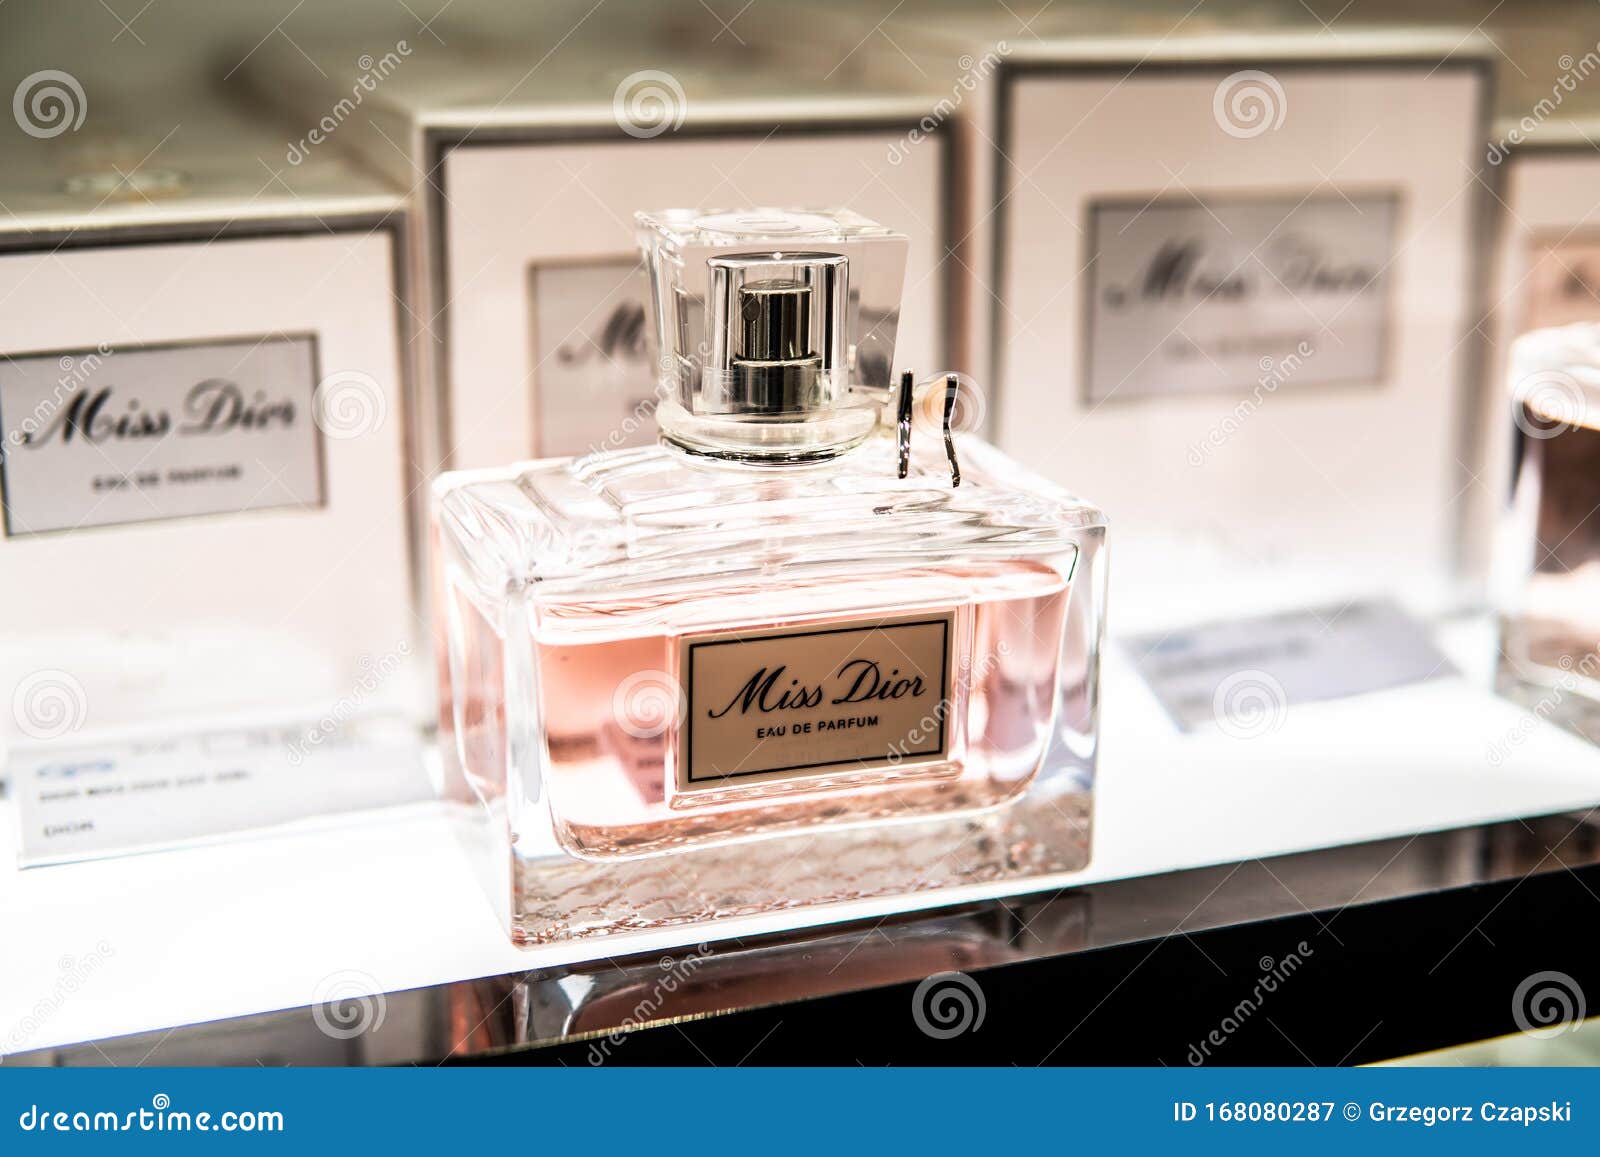 Miss Dior Perfume On The Shop Display 